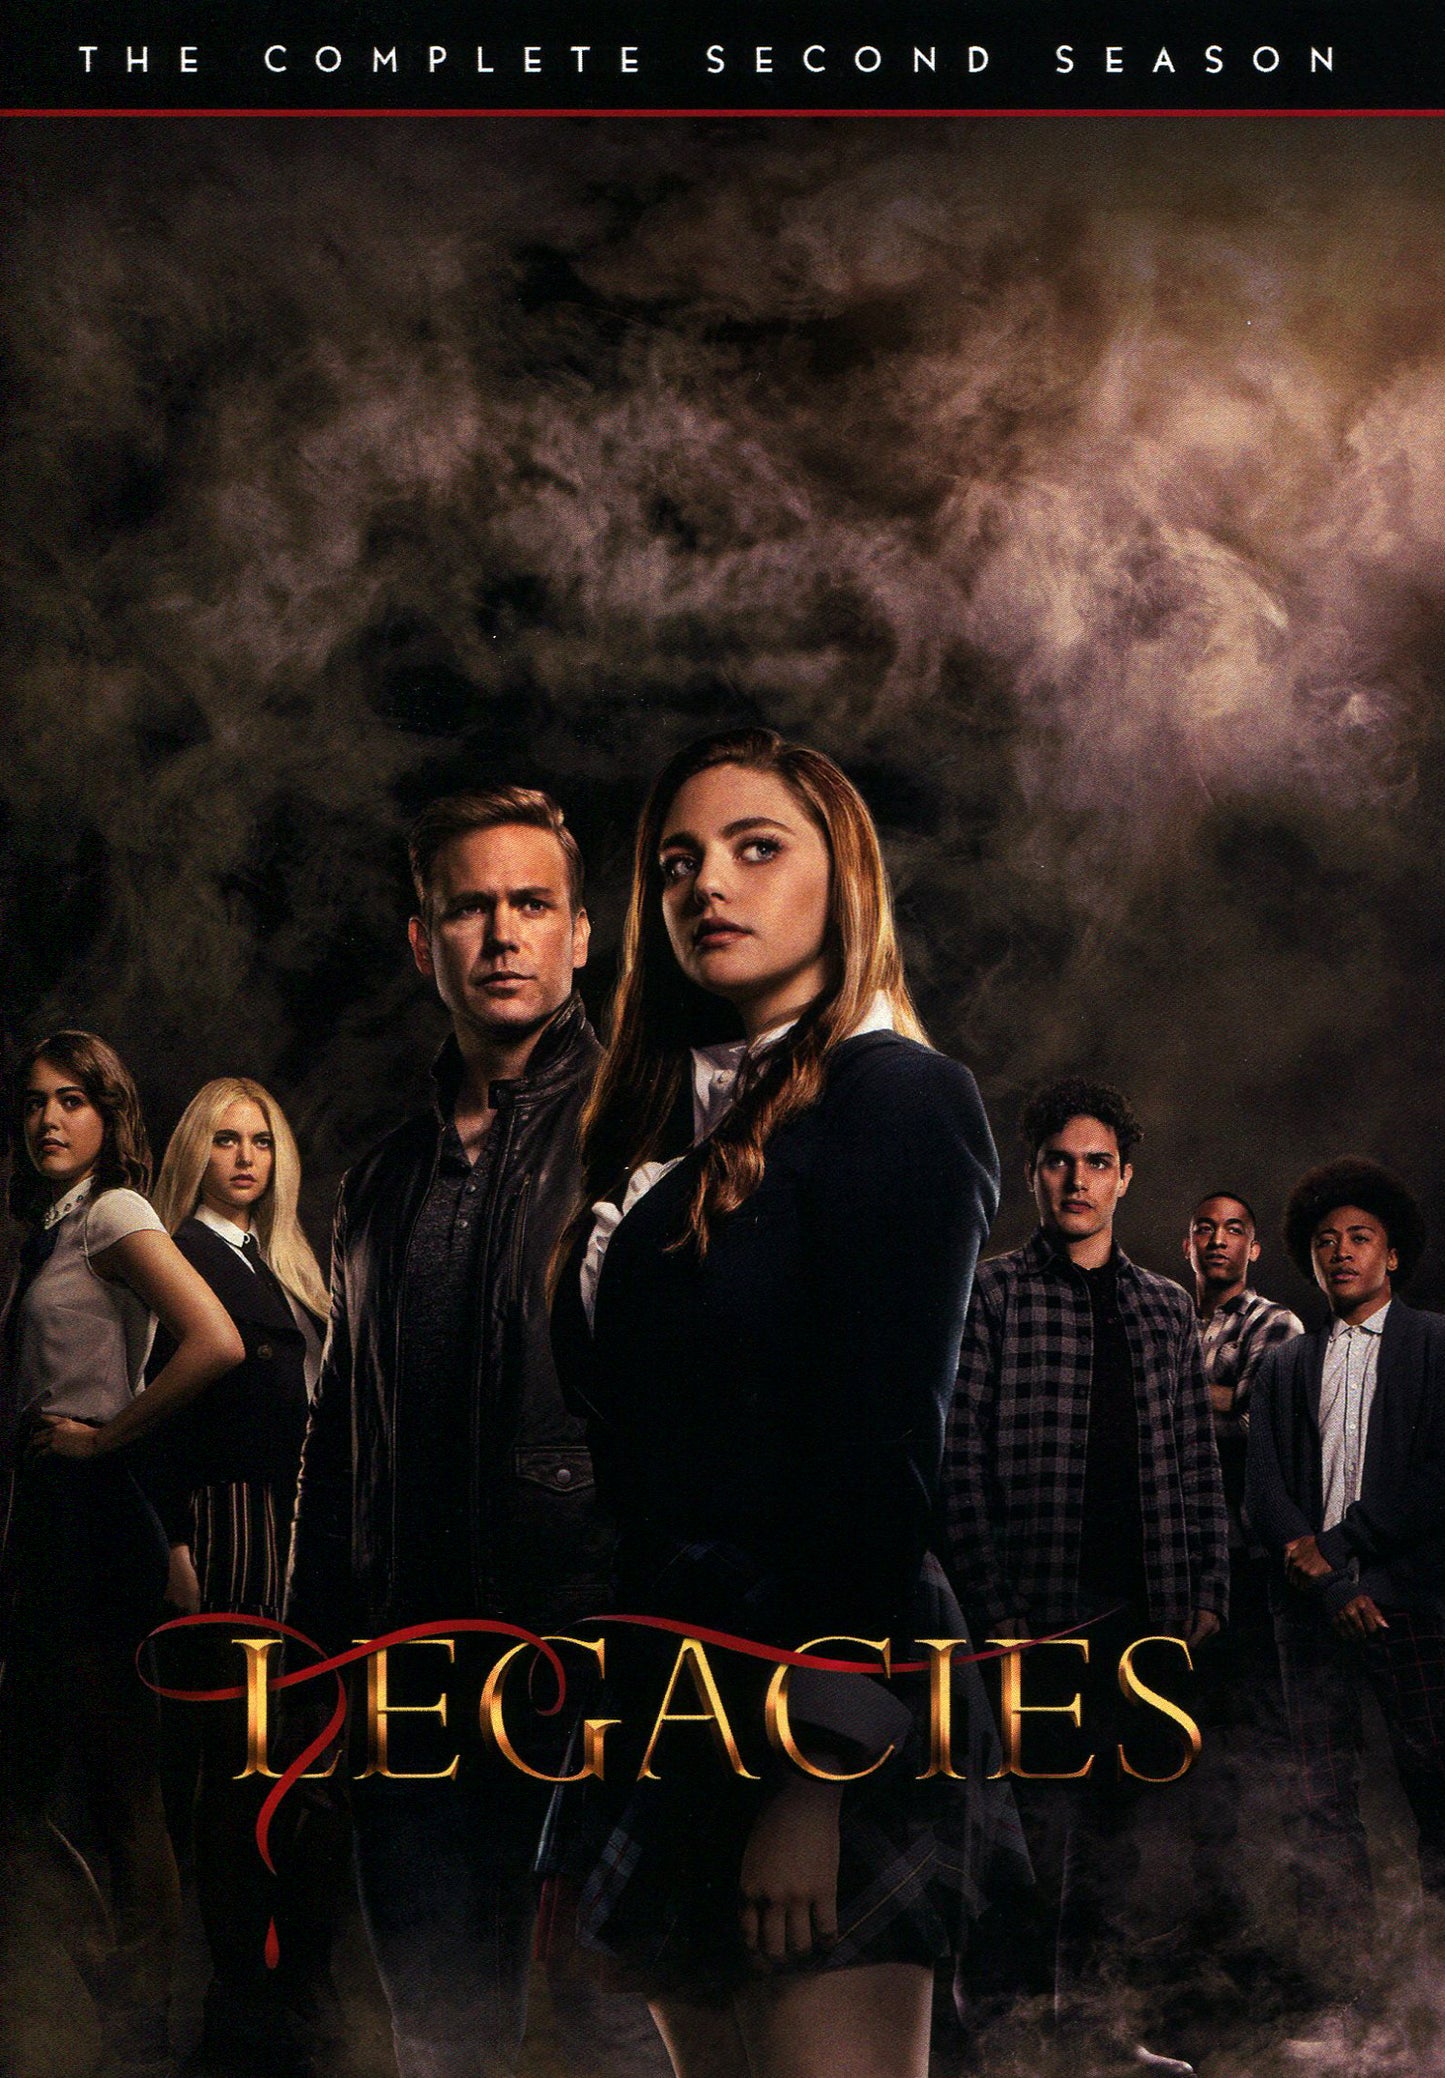 Legacies: The Complete Second Season [3 Discs] cover art